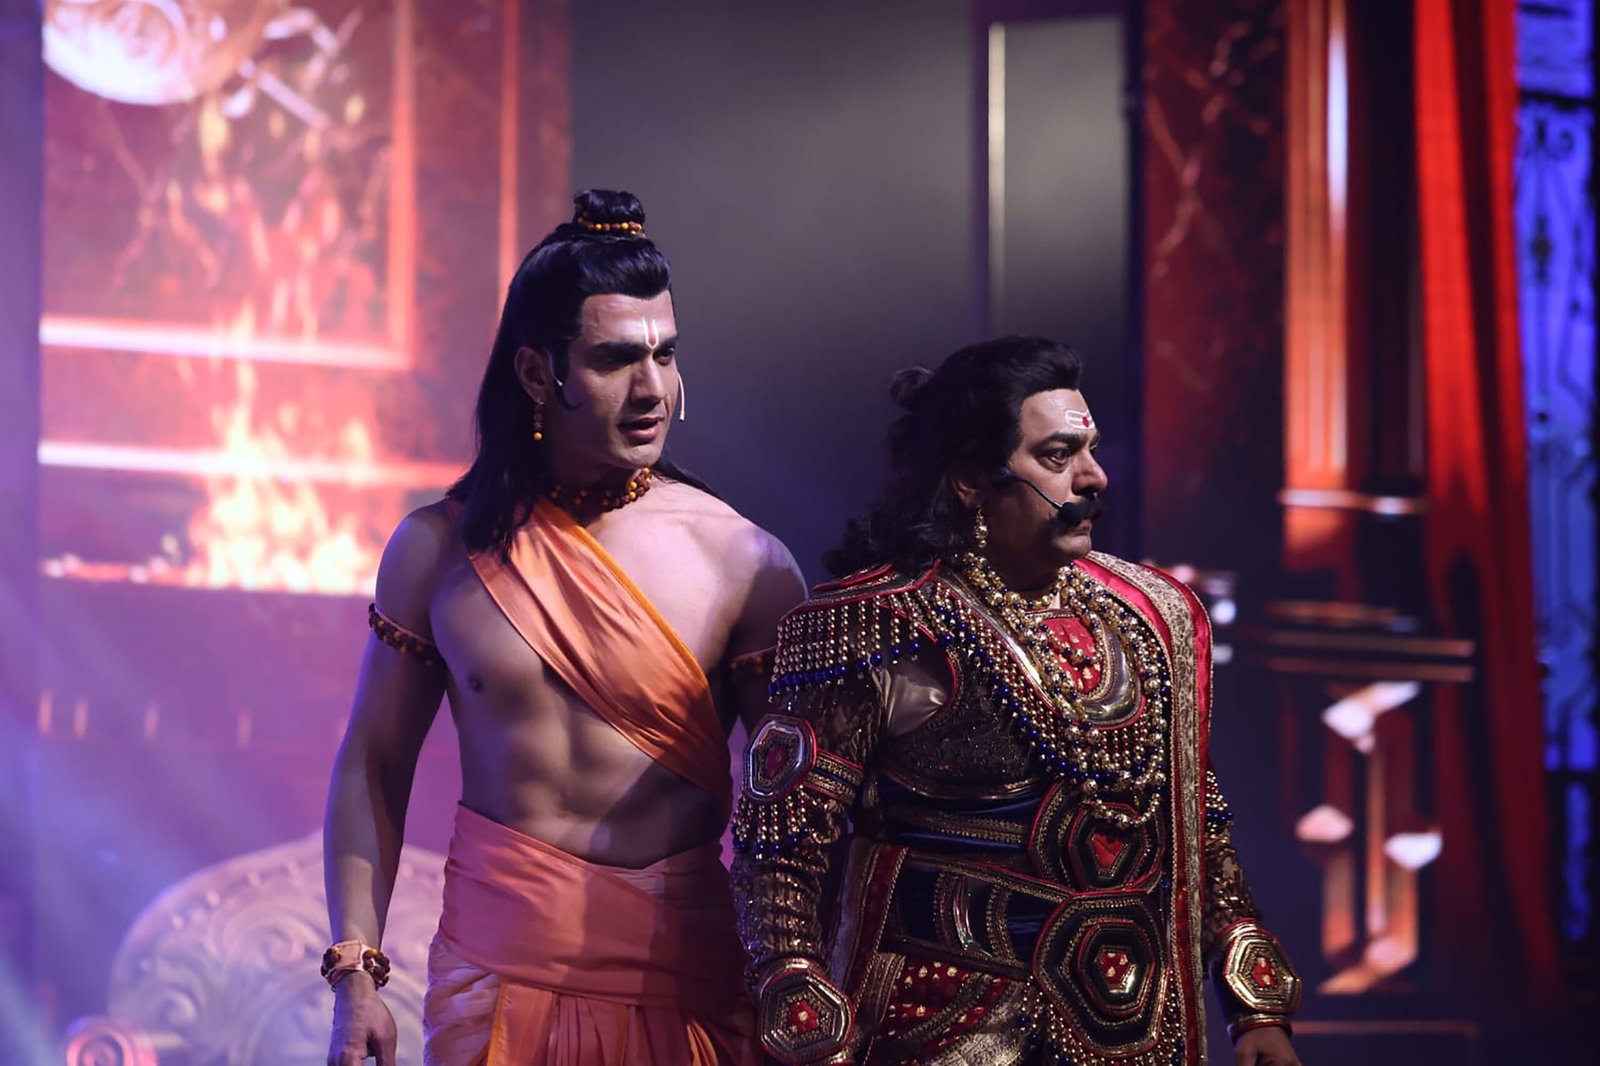 Lord Ram played by Rahull R Bhuchar and Ravan played by Ashutosh Rana